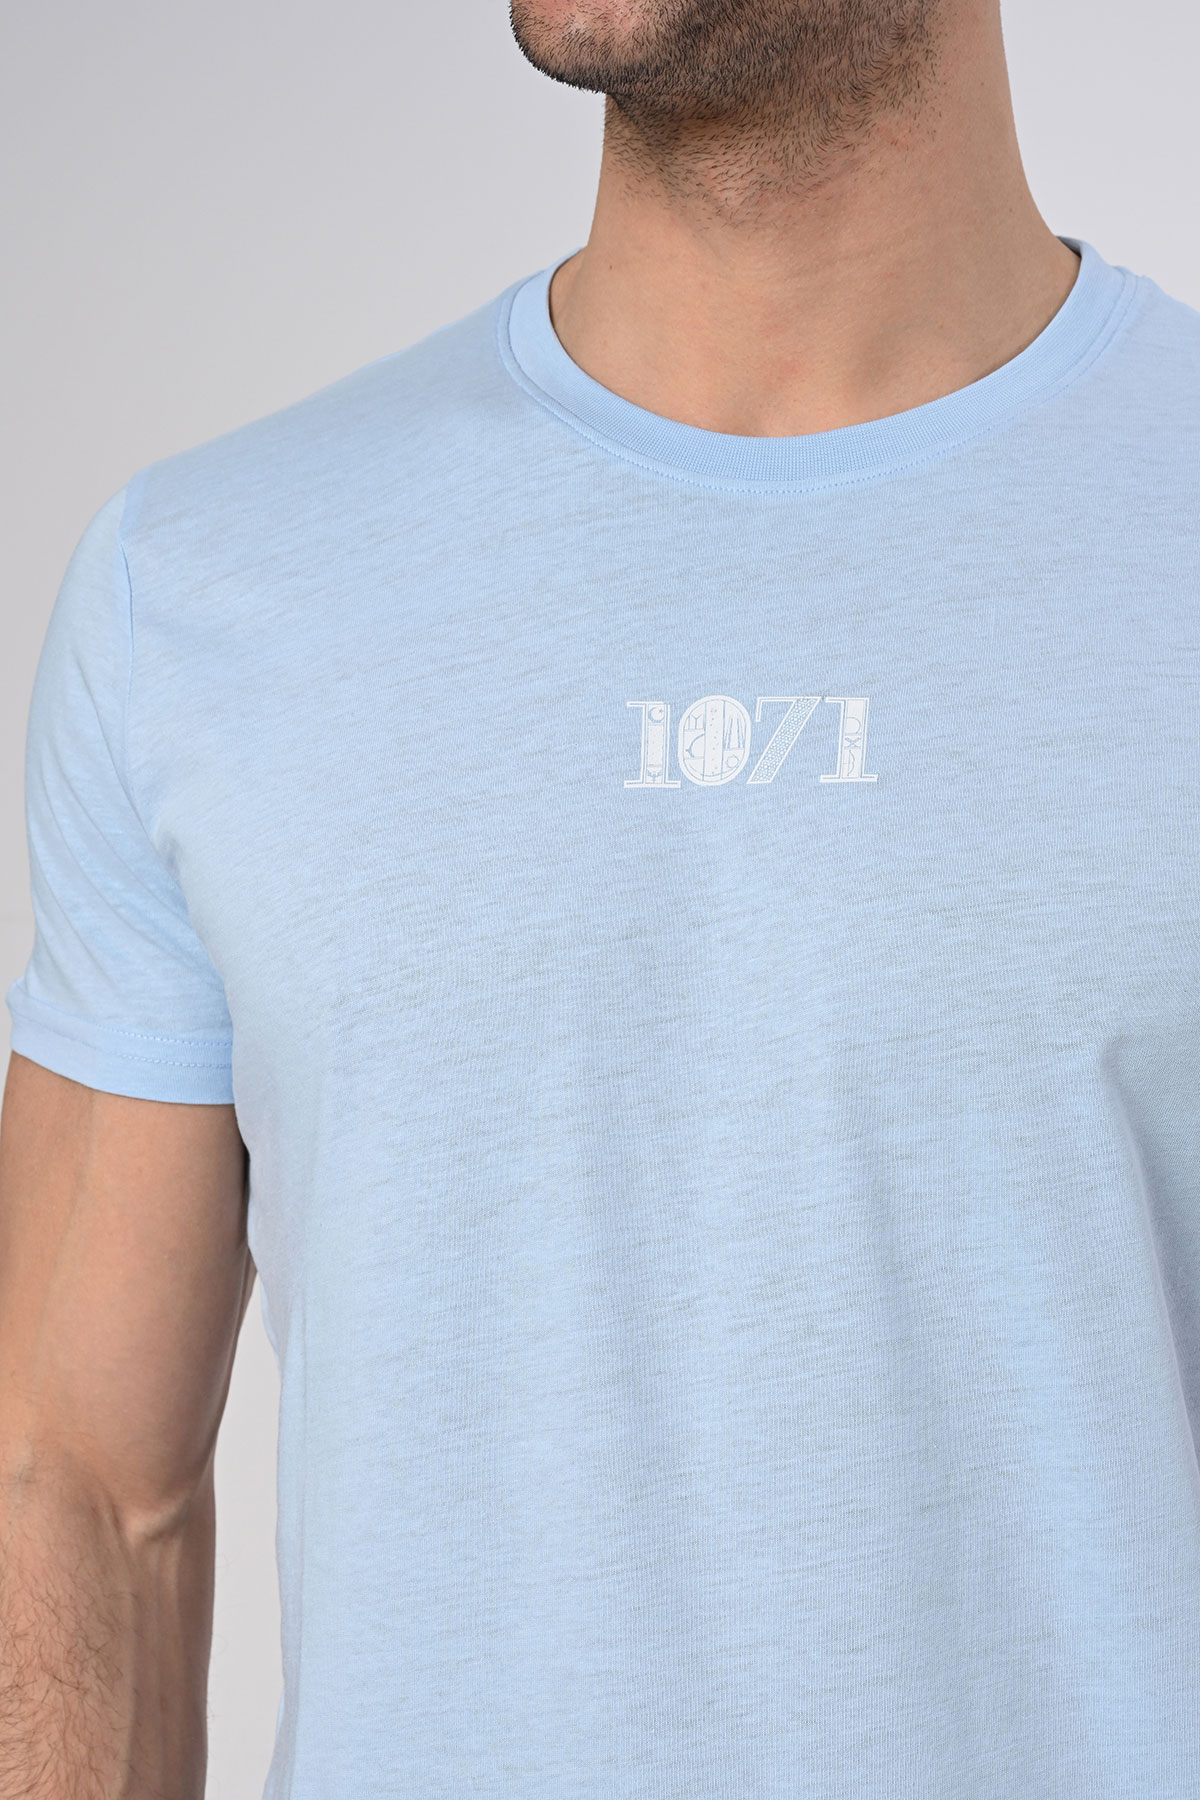 Yeni Sezon 1071 Tasarım Pamuk Bisiklet Yaka Mavi T-shirt 23'